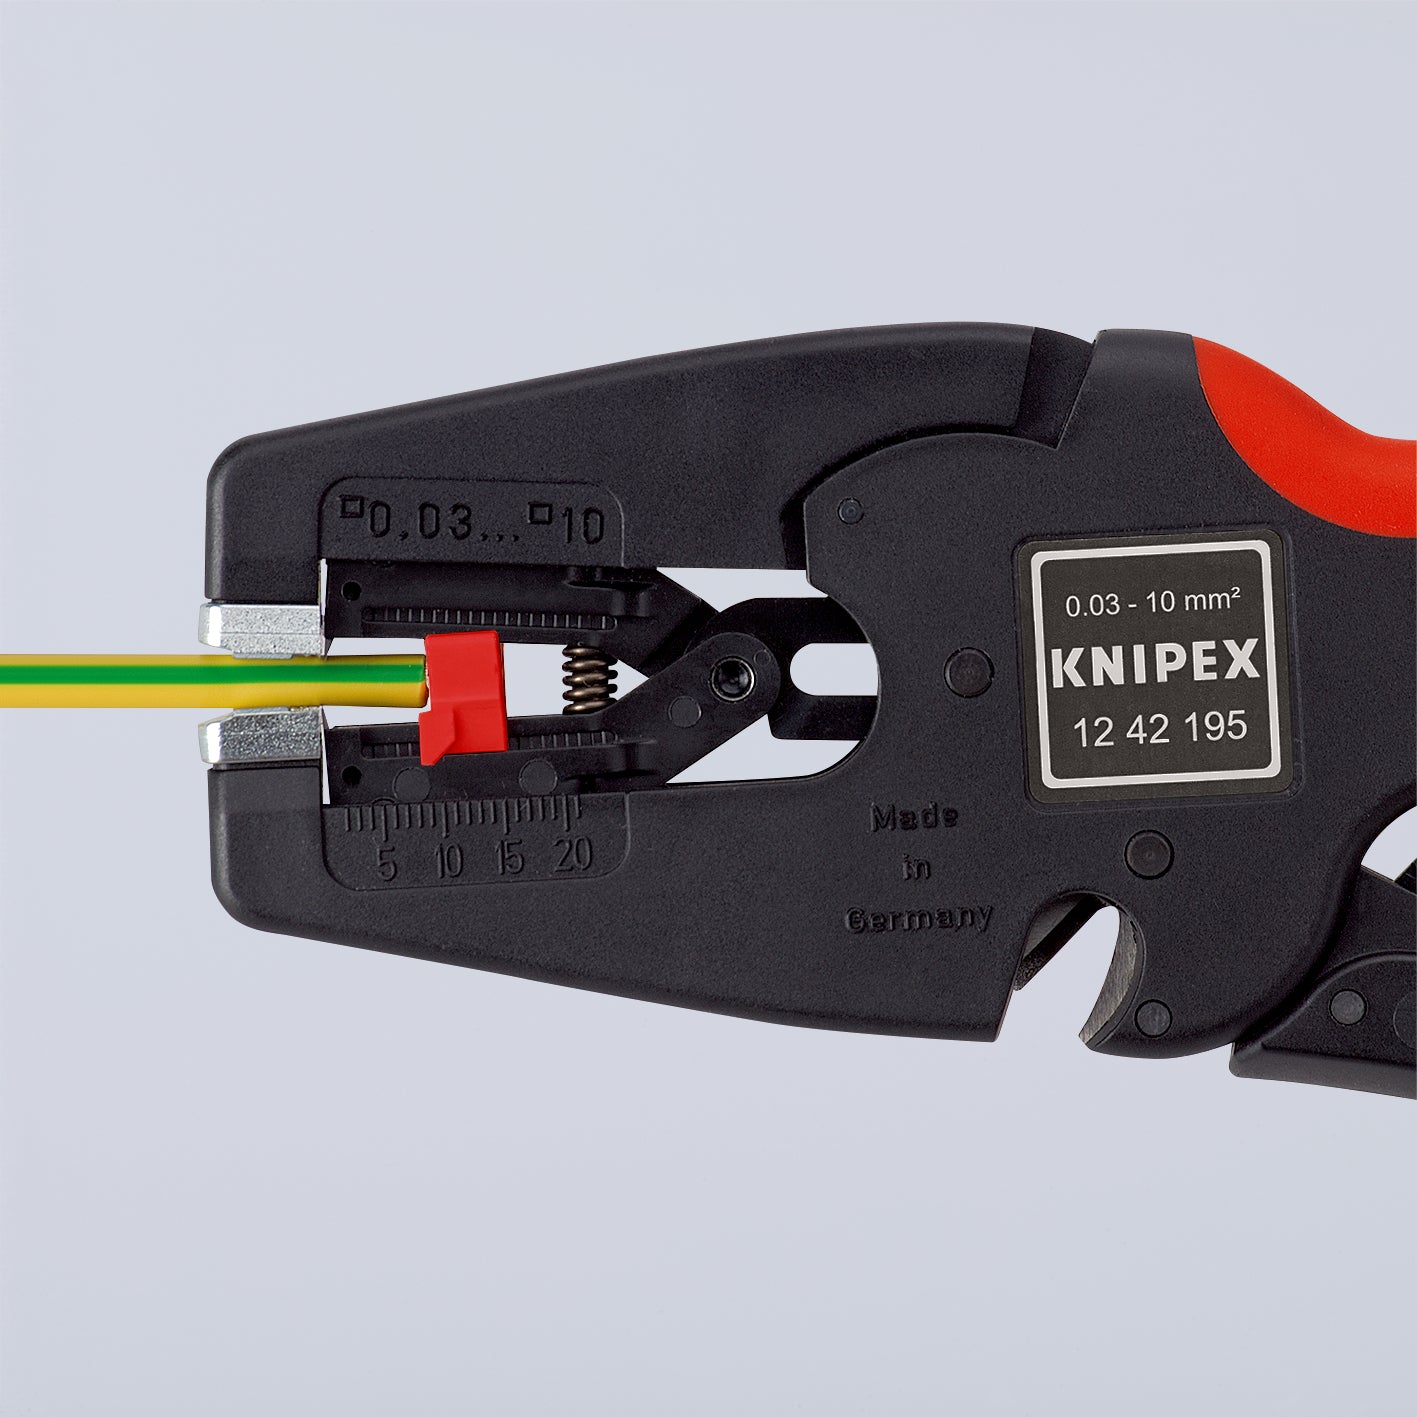 Knipex 12 42 195 – MultiStrip 10 Self-Adjusting Wire Stripper